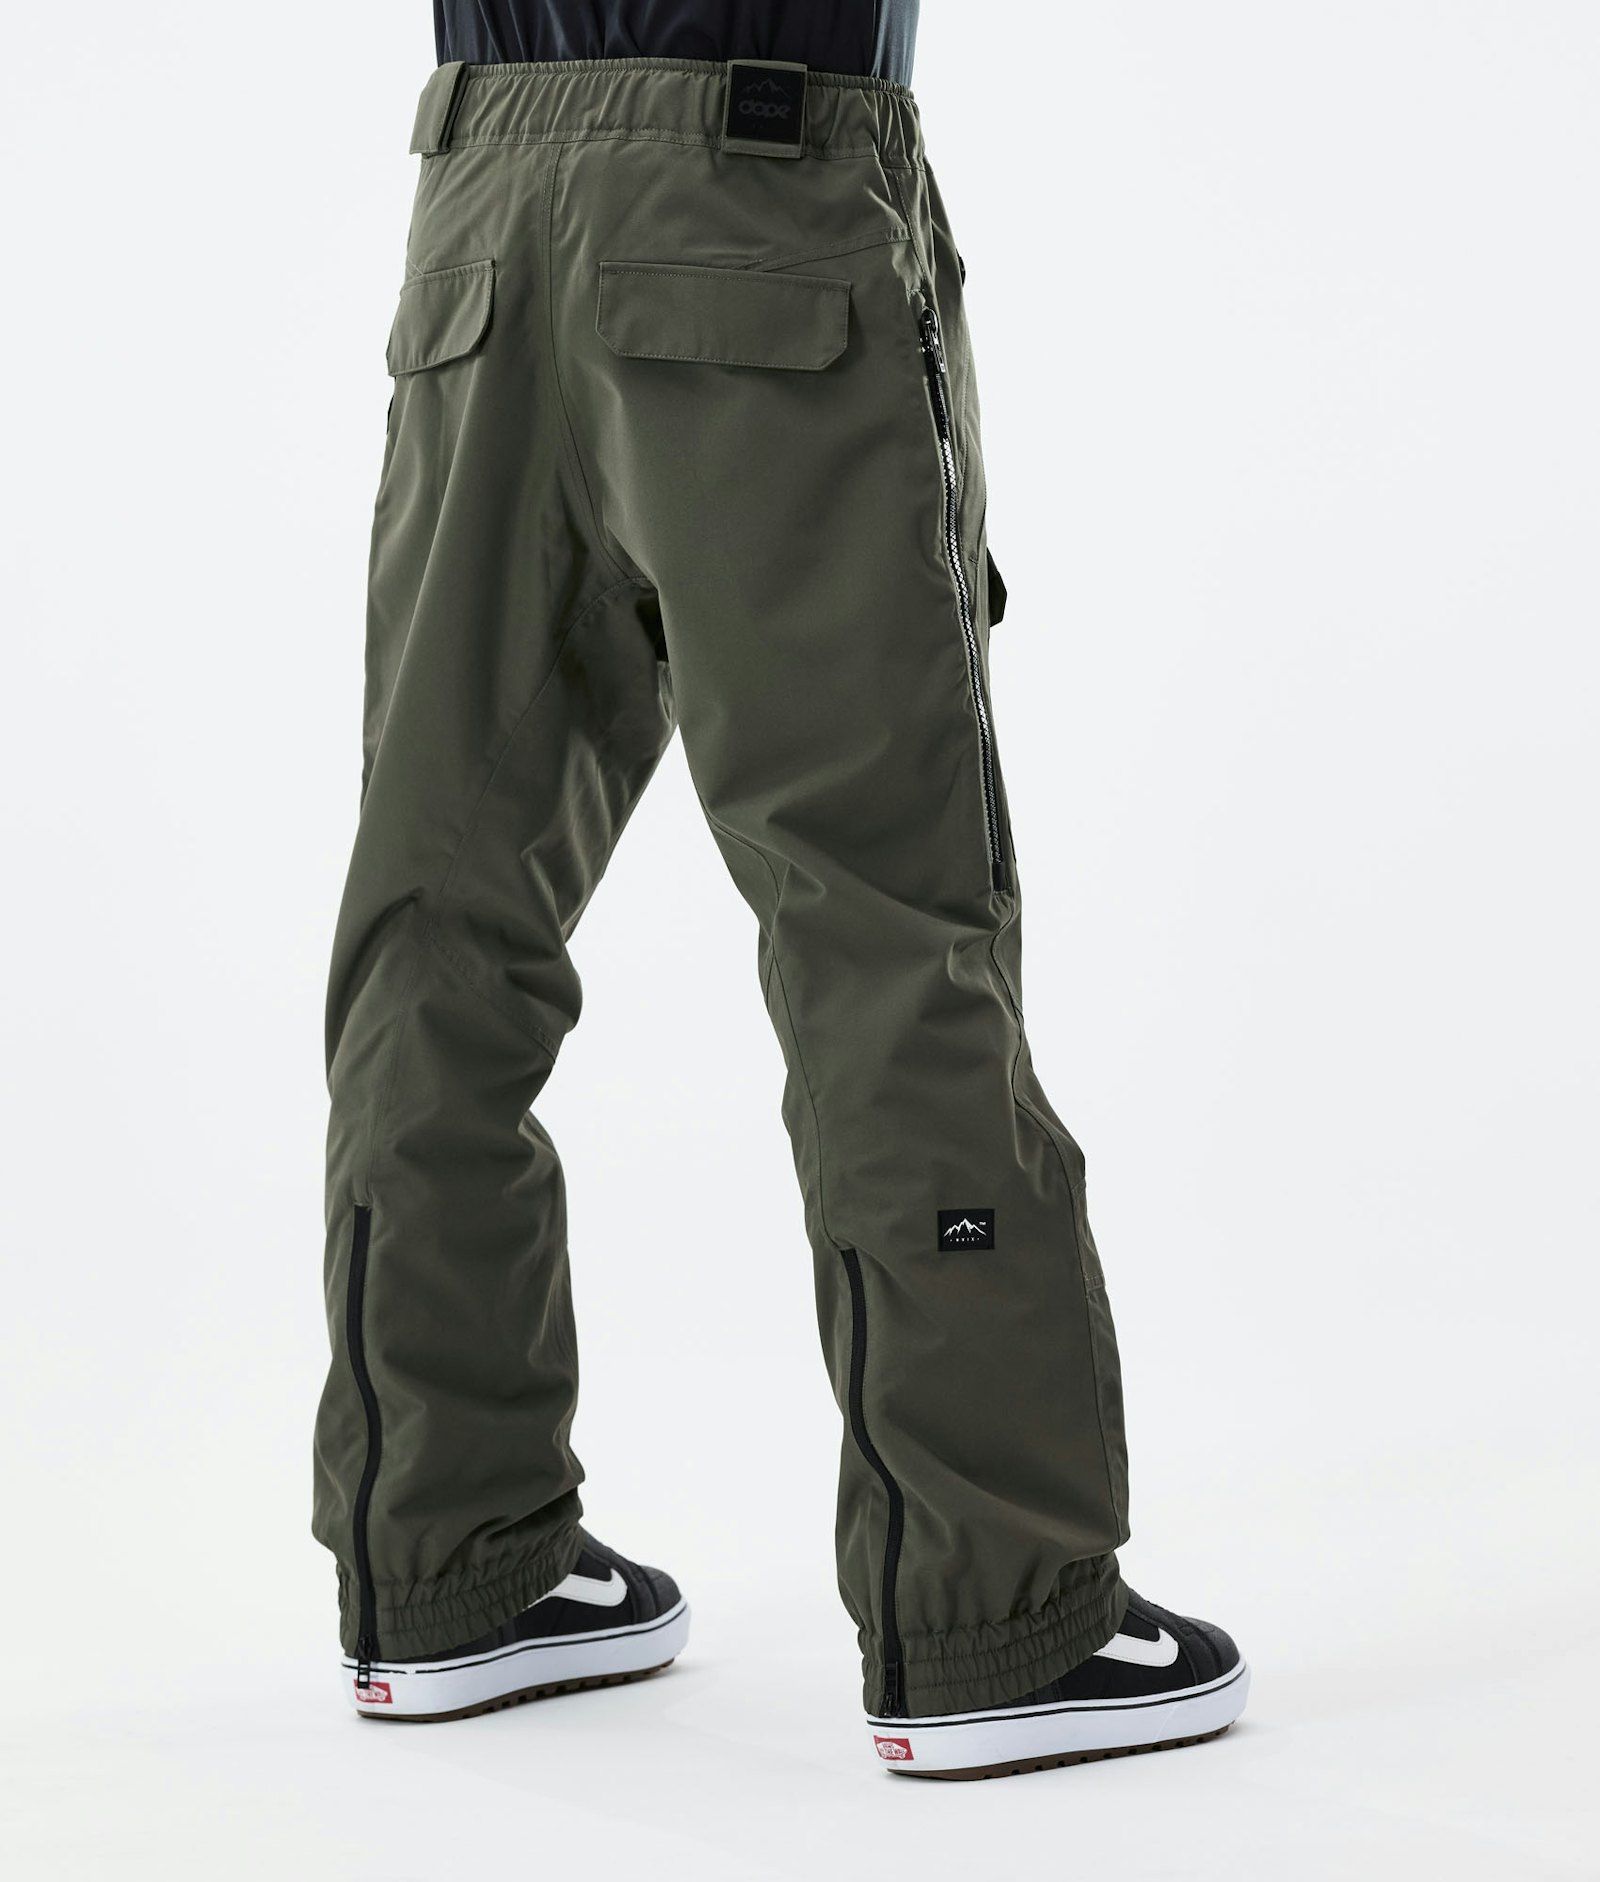 Antek 2021 Pantalon de Snowboard Homme Olive Green